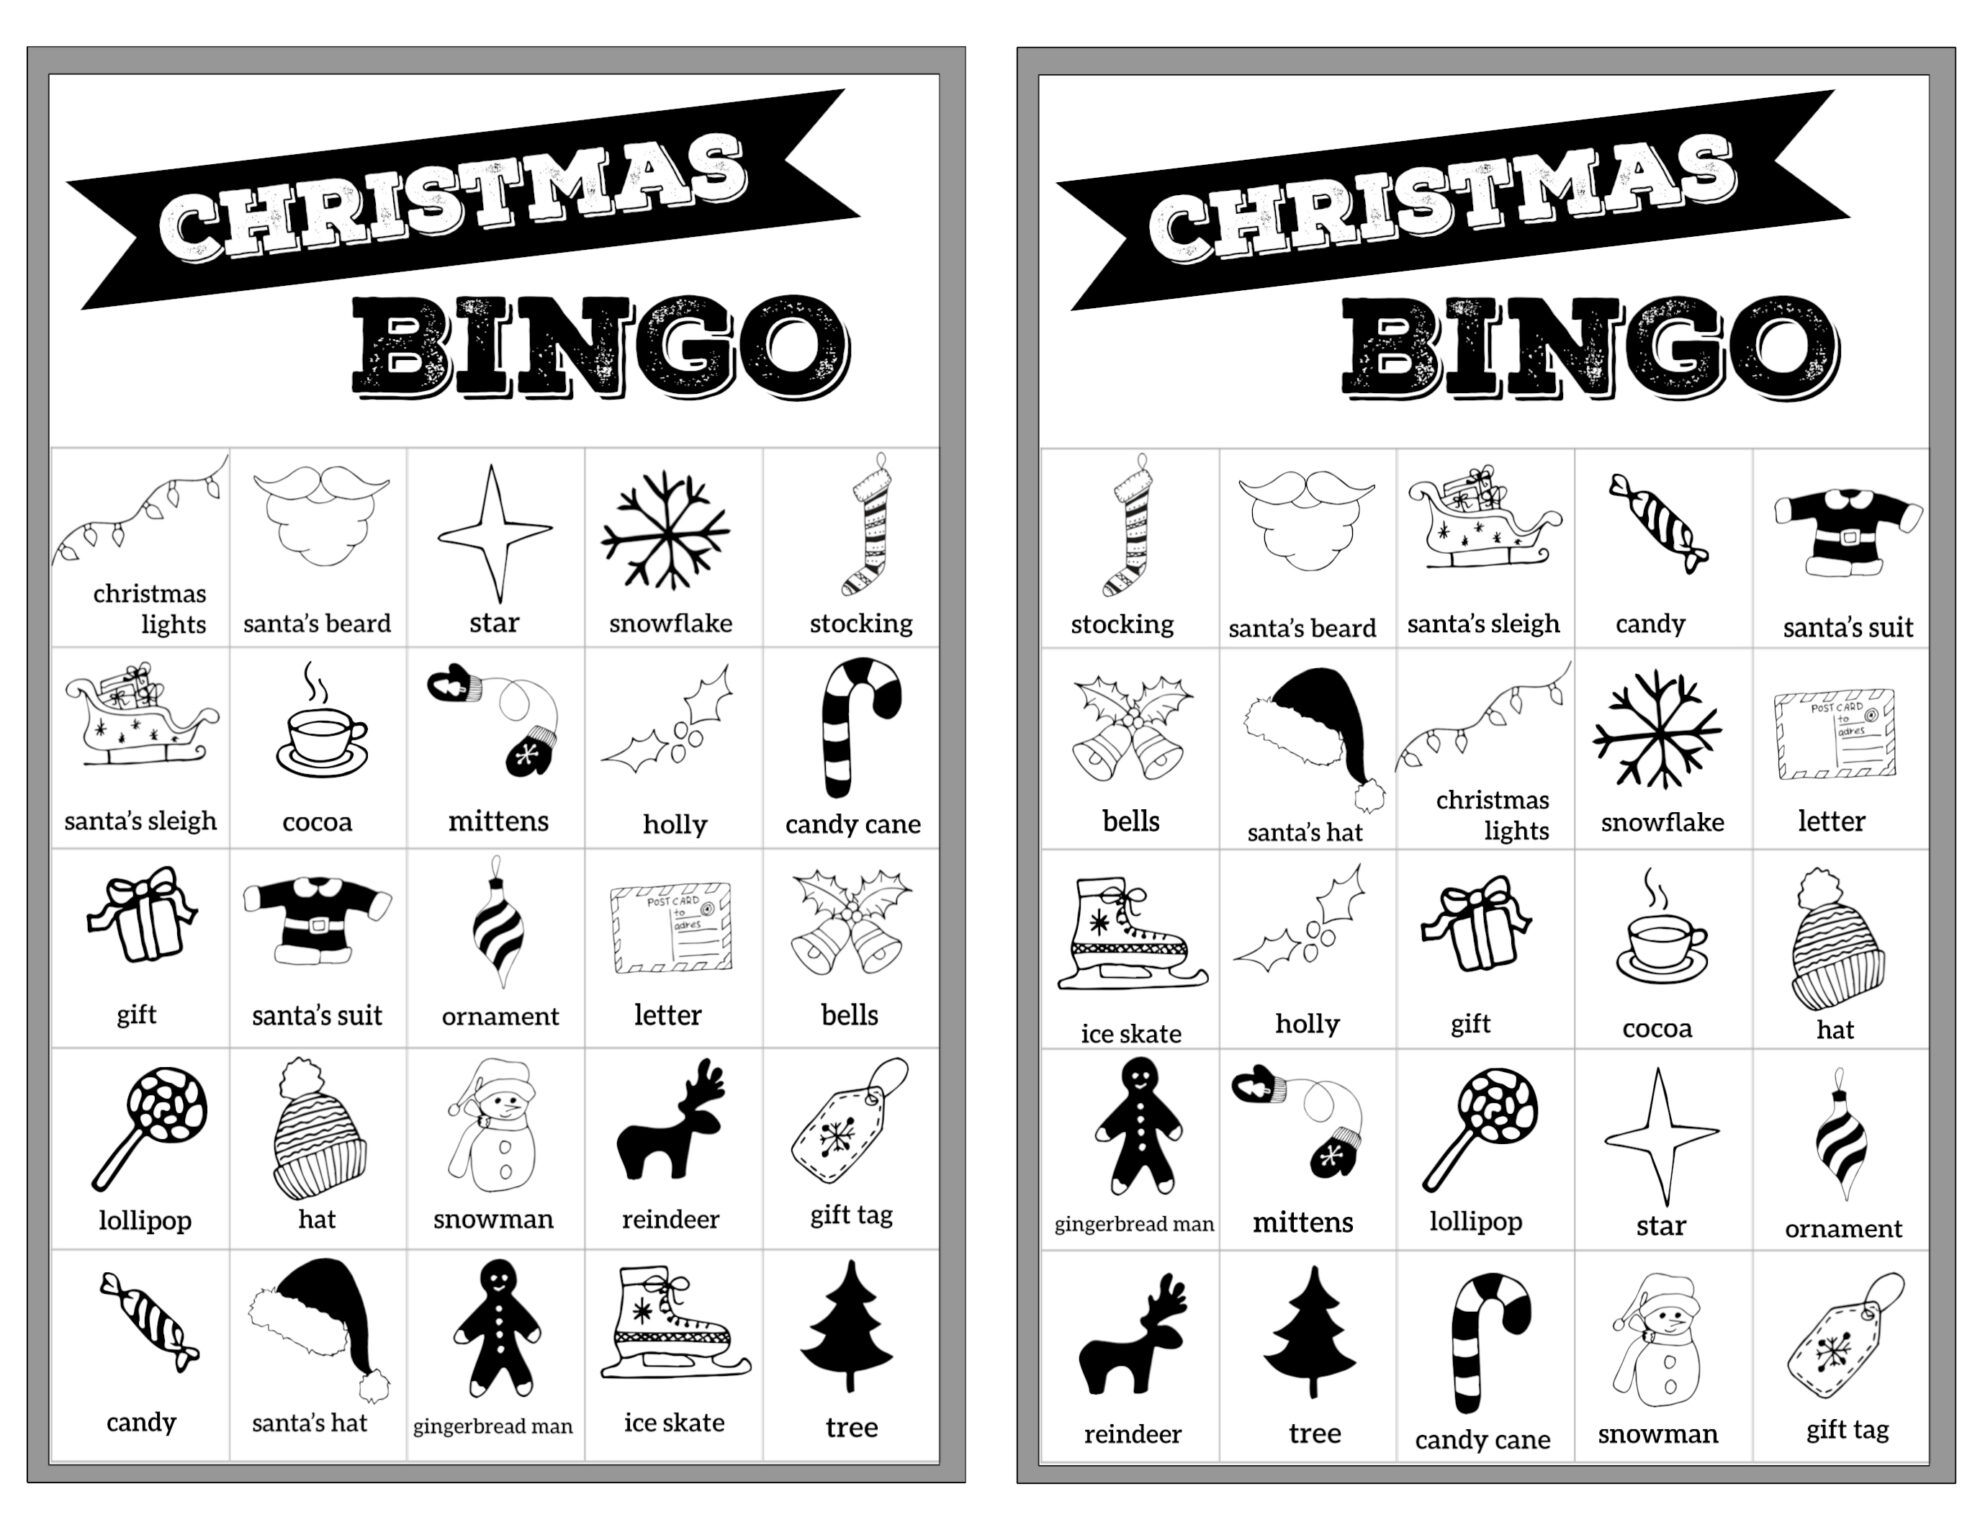 Free Christmas Bingo Printable Cards - Paper Trail Design - Free Printable Holiday Bingo Games